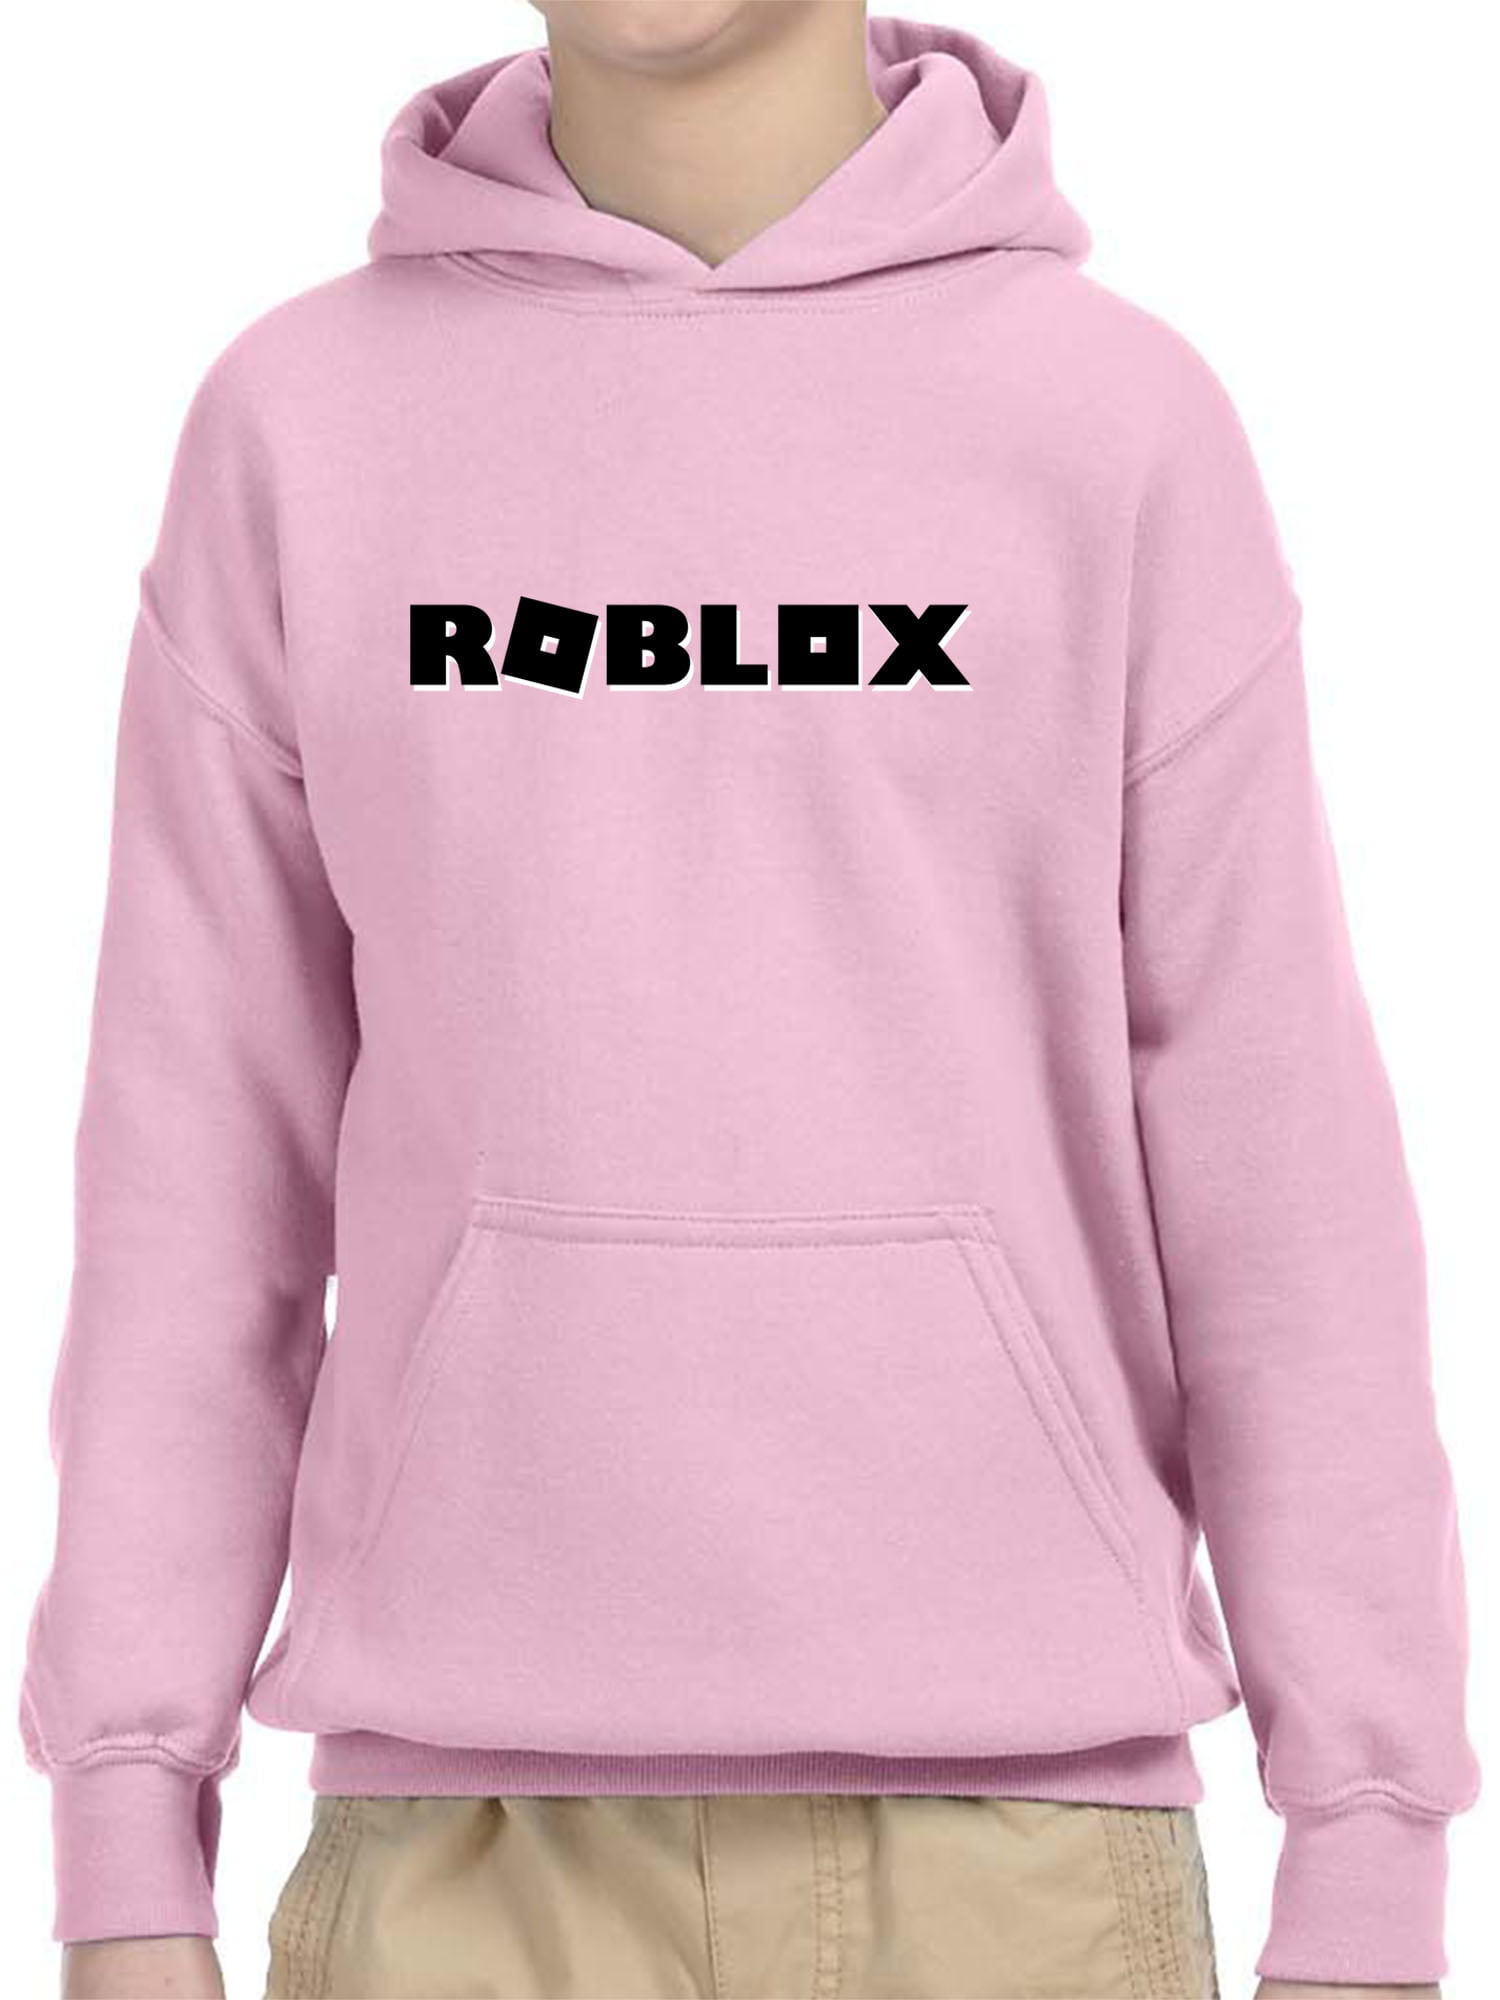 New Way New Way 1168 Youth Hoodie Roblox Block Logo Game Accent Unisex Pullover Sweatshirt Medium Light Pink Walmart Com Walmart Com - white animal hoodie roblox